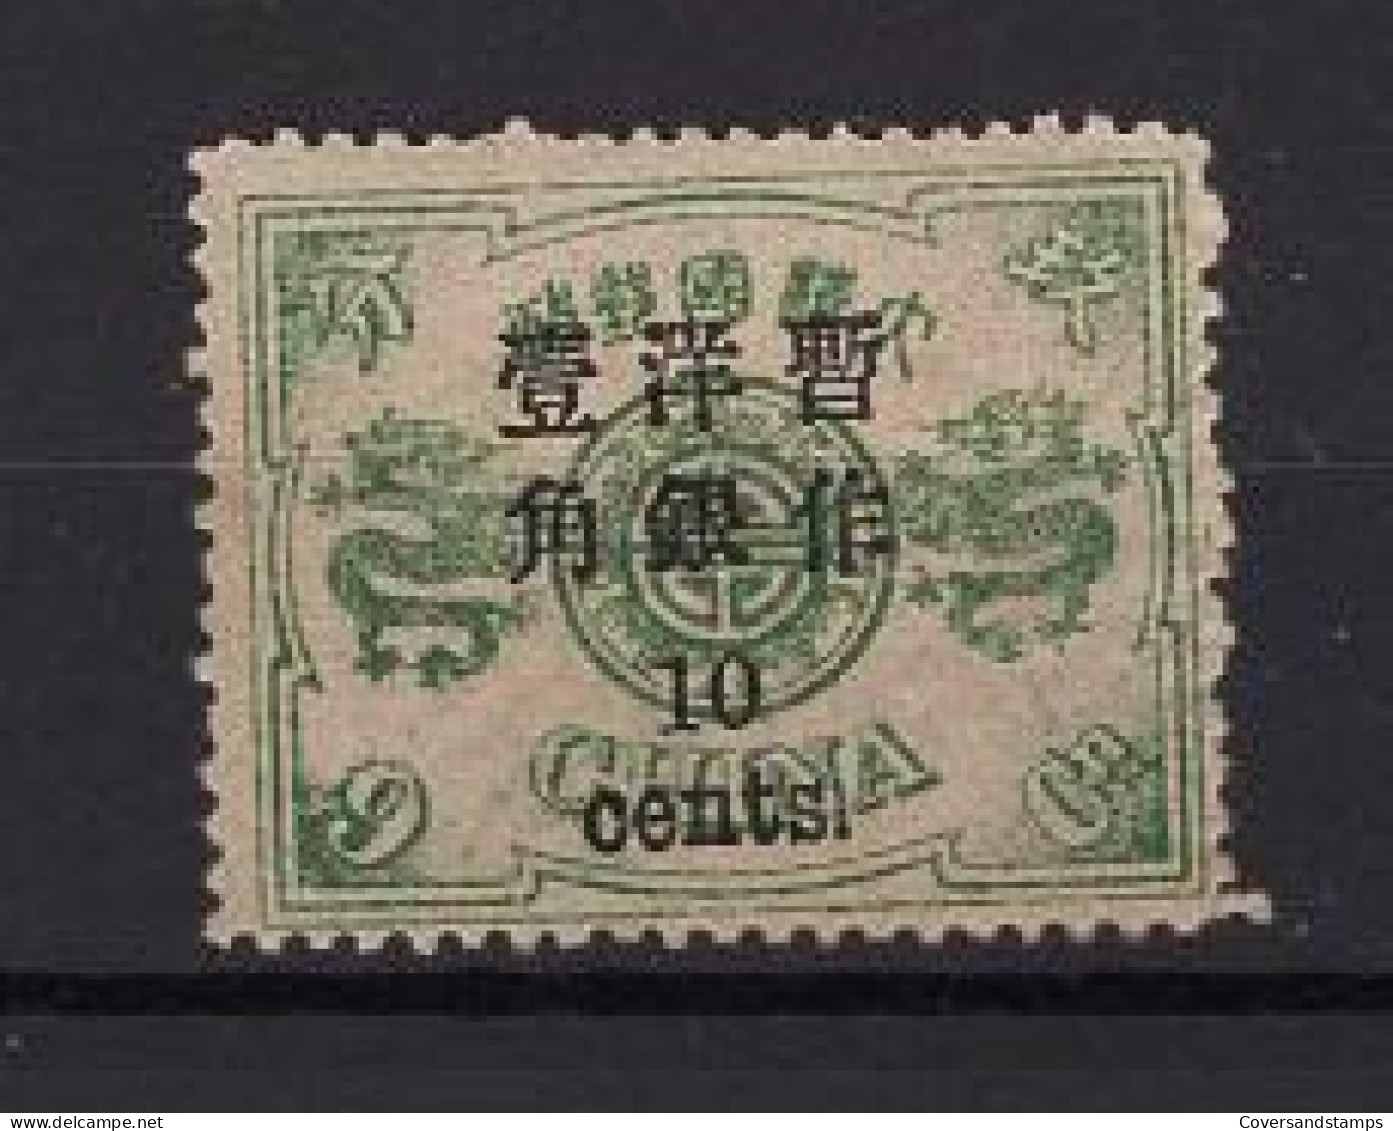  China - Sc 35 (1879)  * MH - Neufs